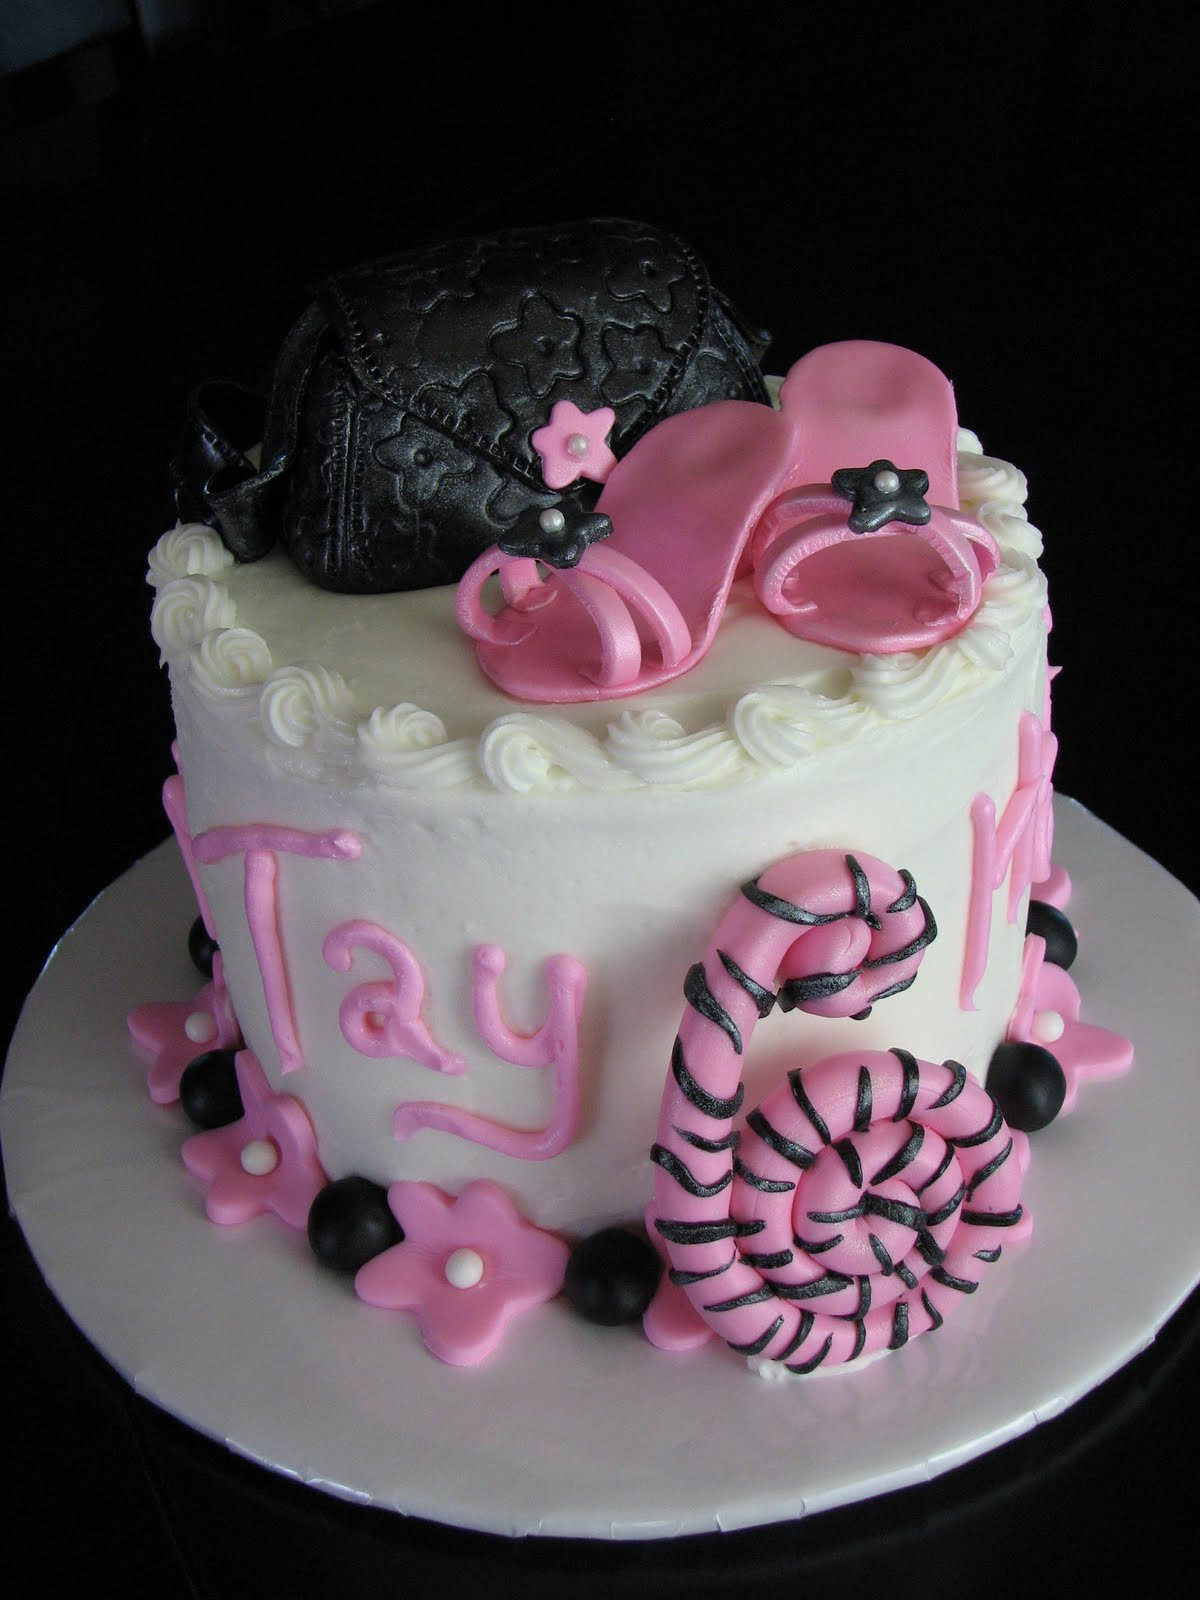 Diva Birthday Cake
 Decadent Designs Pink and Black Diva Birthday Cake